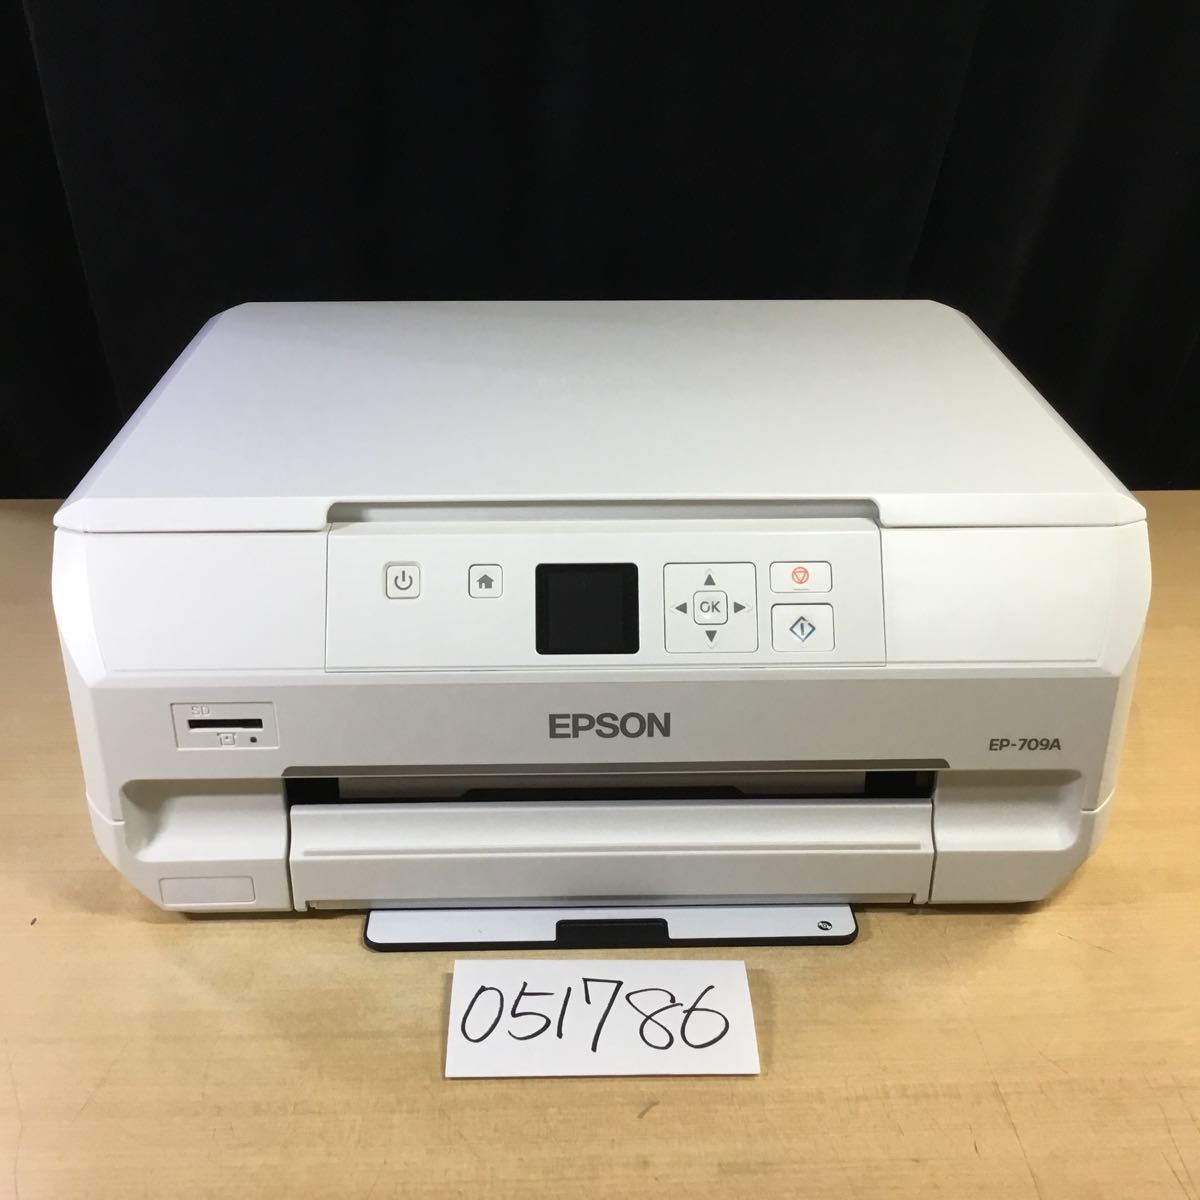 051786) EPSON EP-709A インクジェットプリンタ 複合機 本体のみ ...